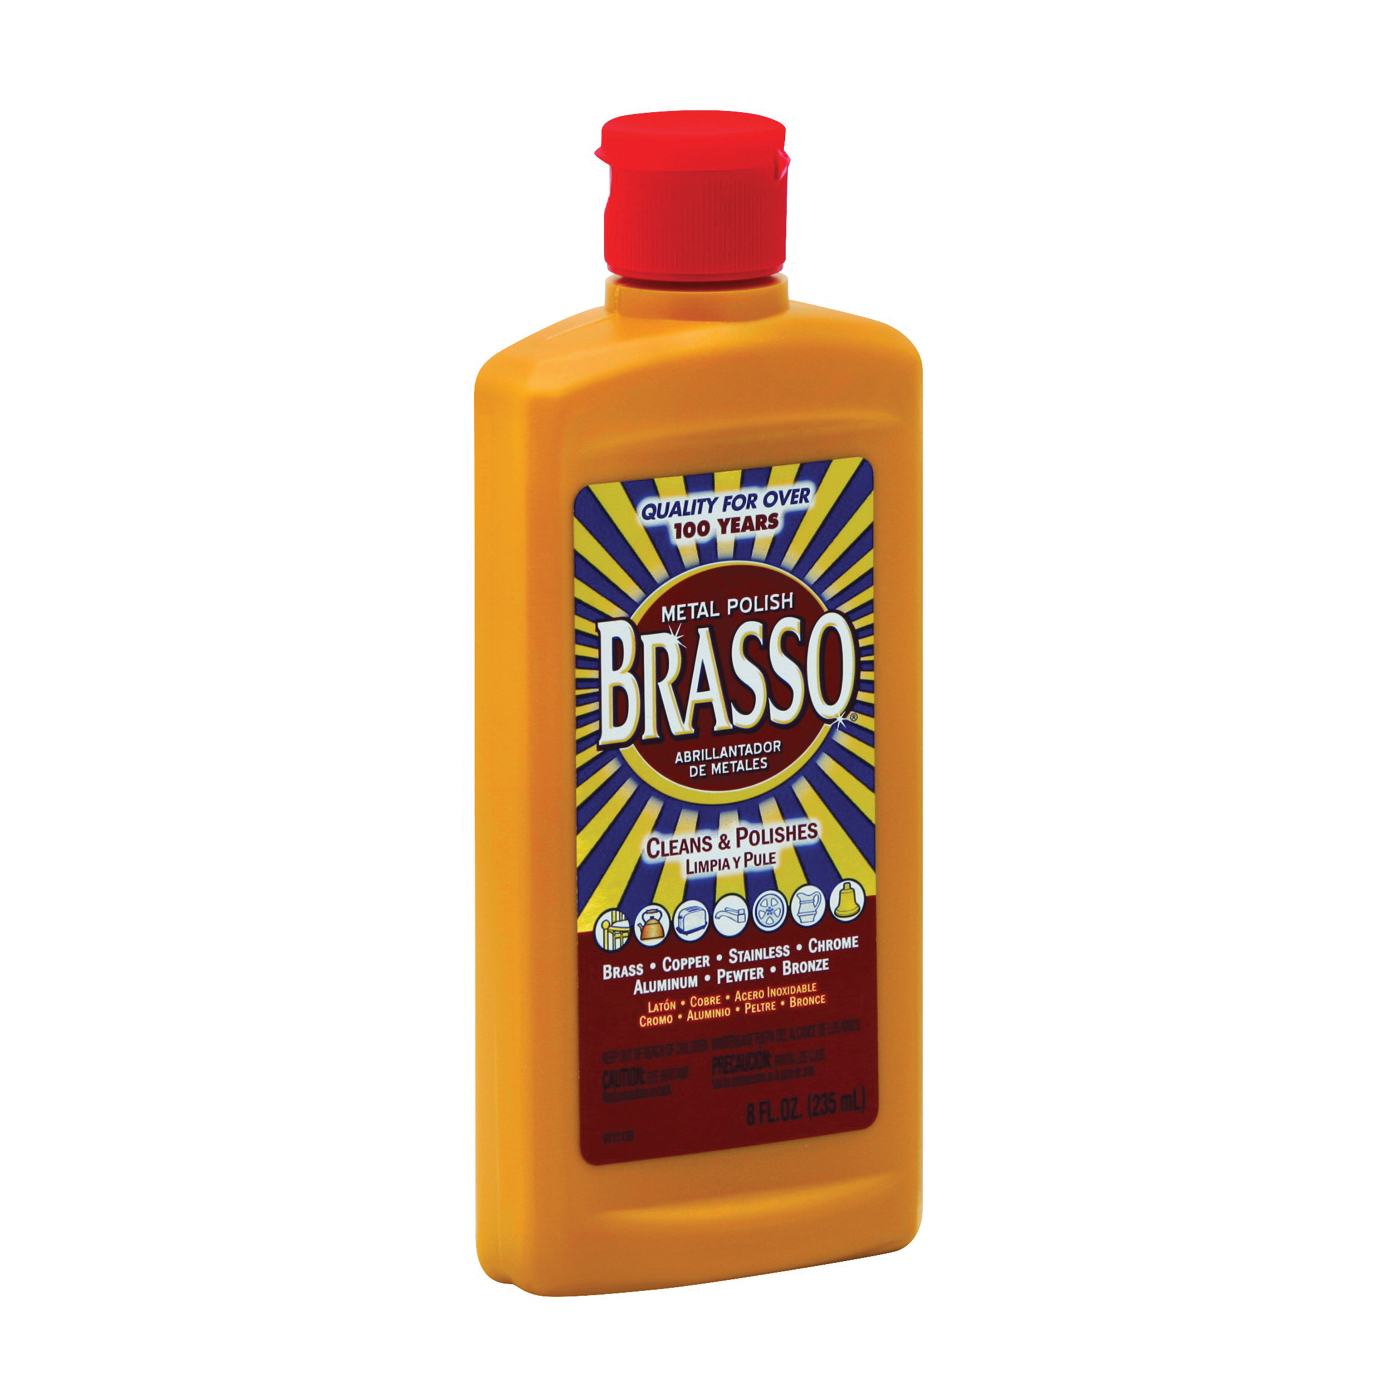 Brasso 2660089334 Metal Polish, 8 oz Bottle, Liquid, Ammo